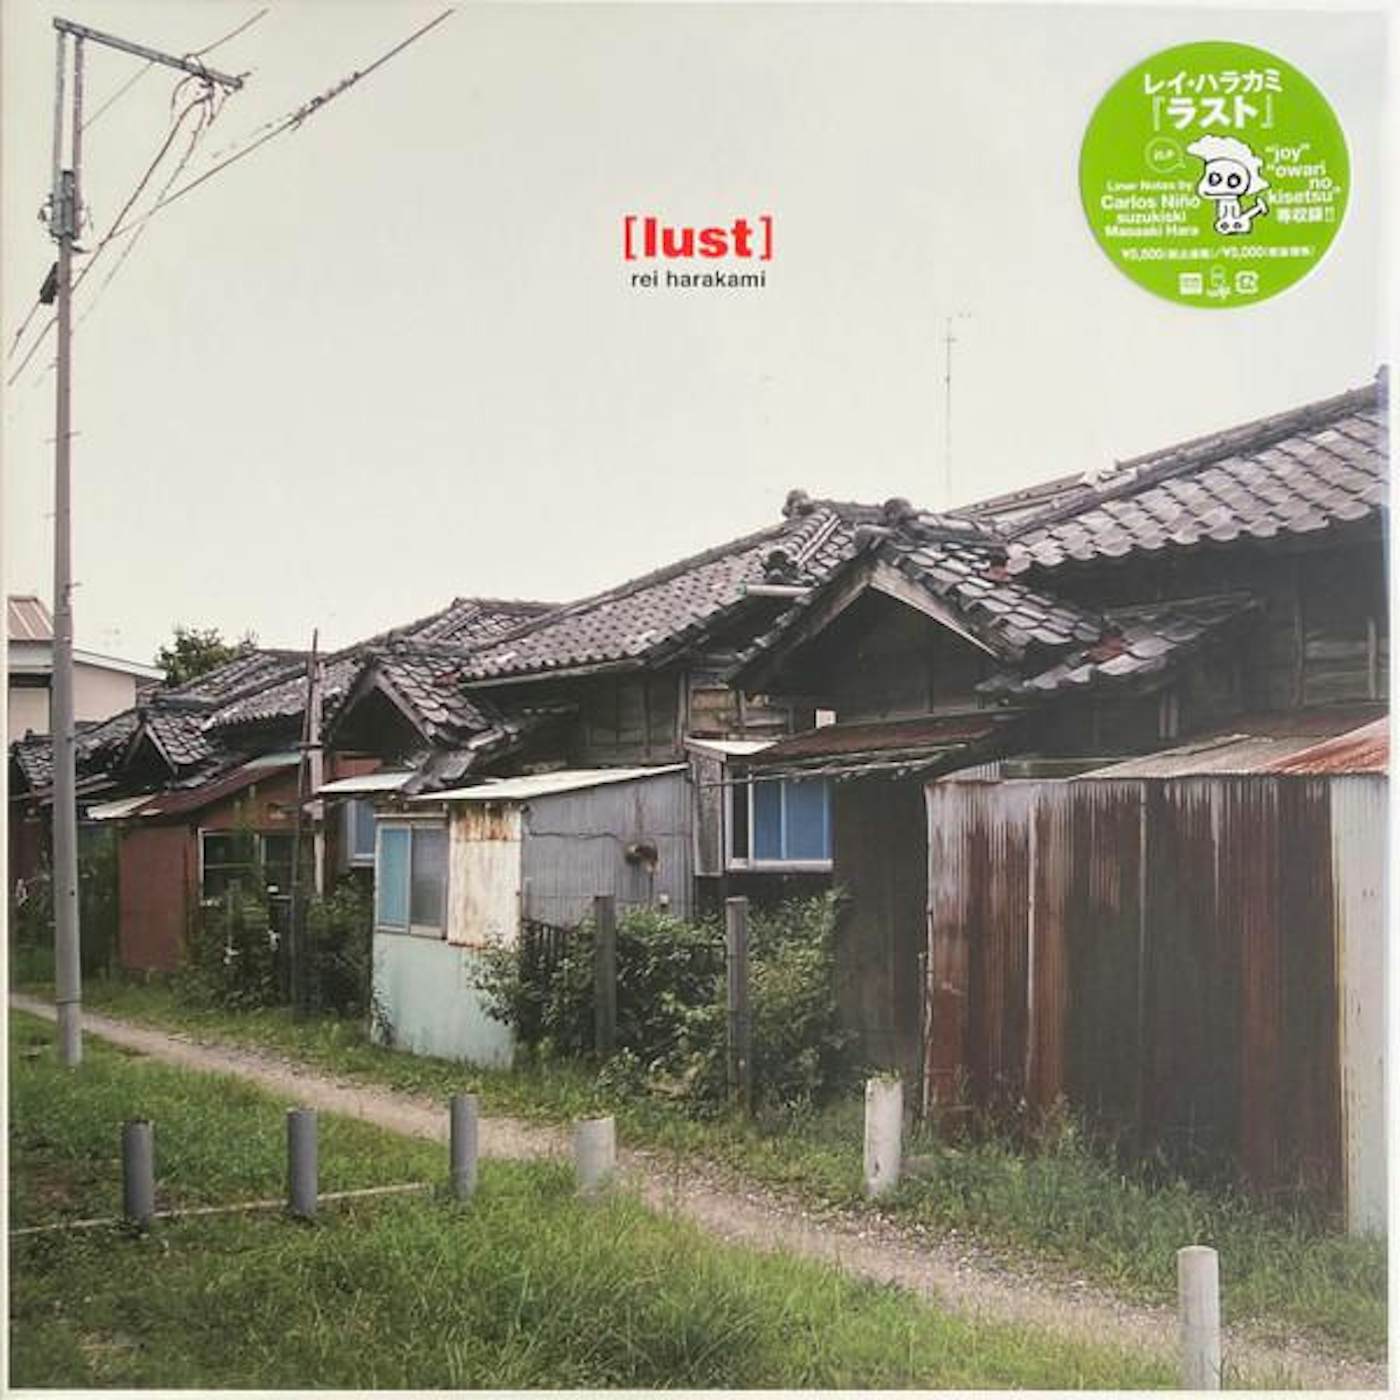 LUST Vinyl Record - Rei Harakami